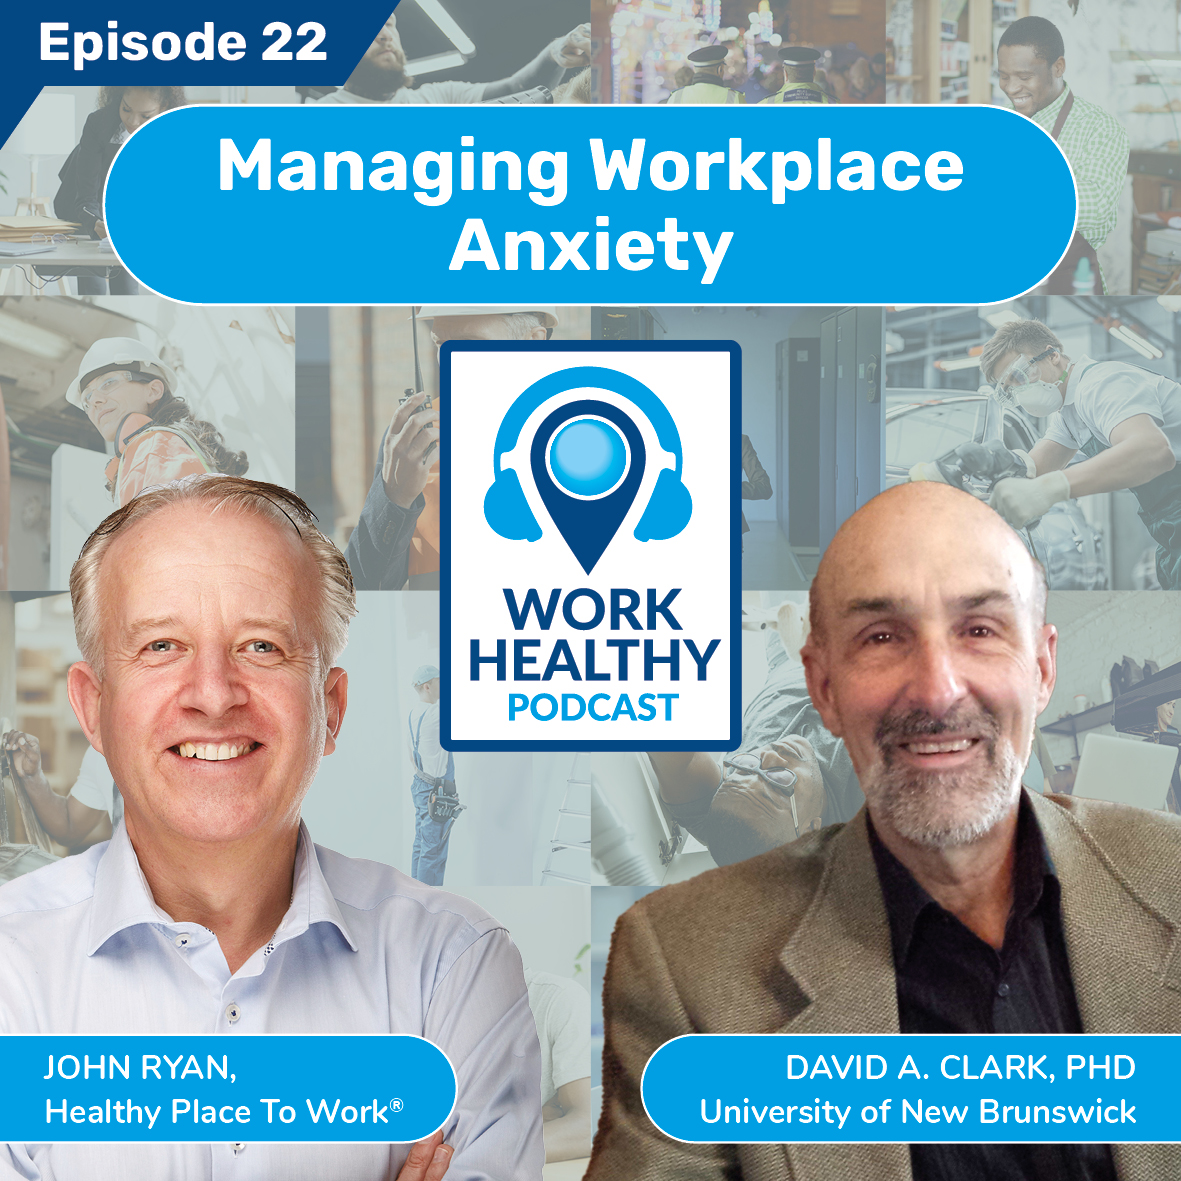 Managing Workplace Anxiety - David A. Clark, PhD